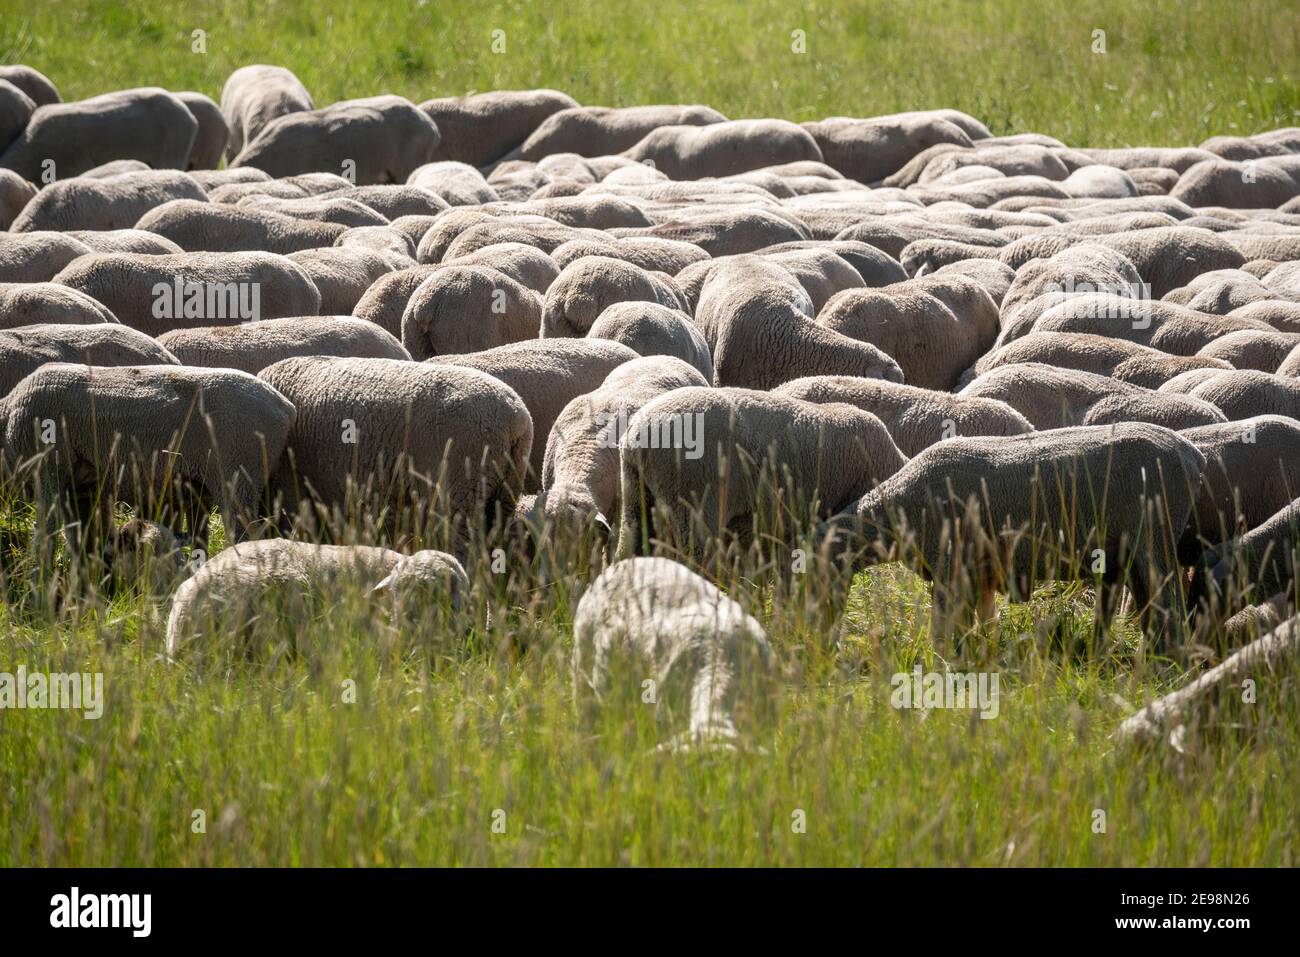 Herd of sheep grazing in tall grass, Wallowa County, Oregon. Stock Photo